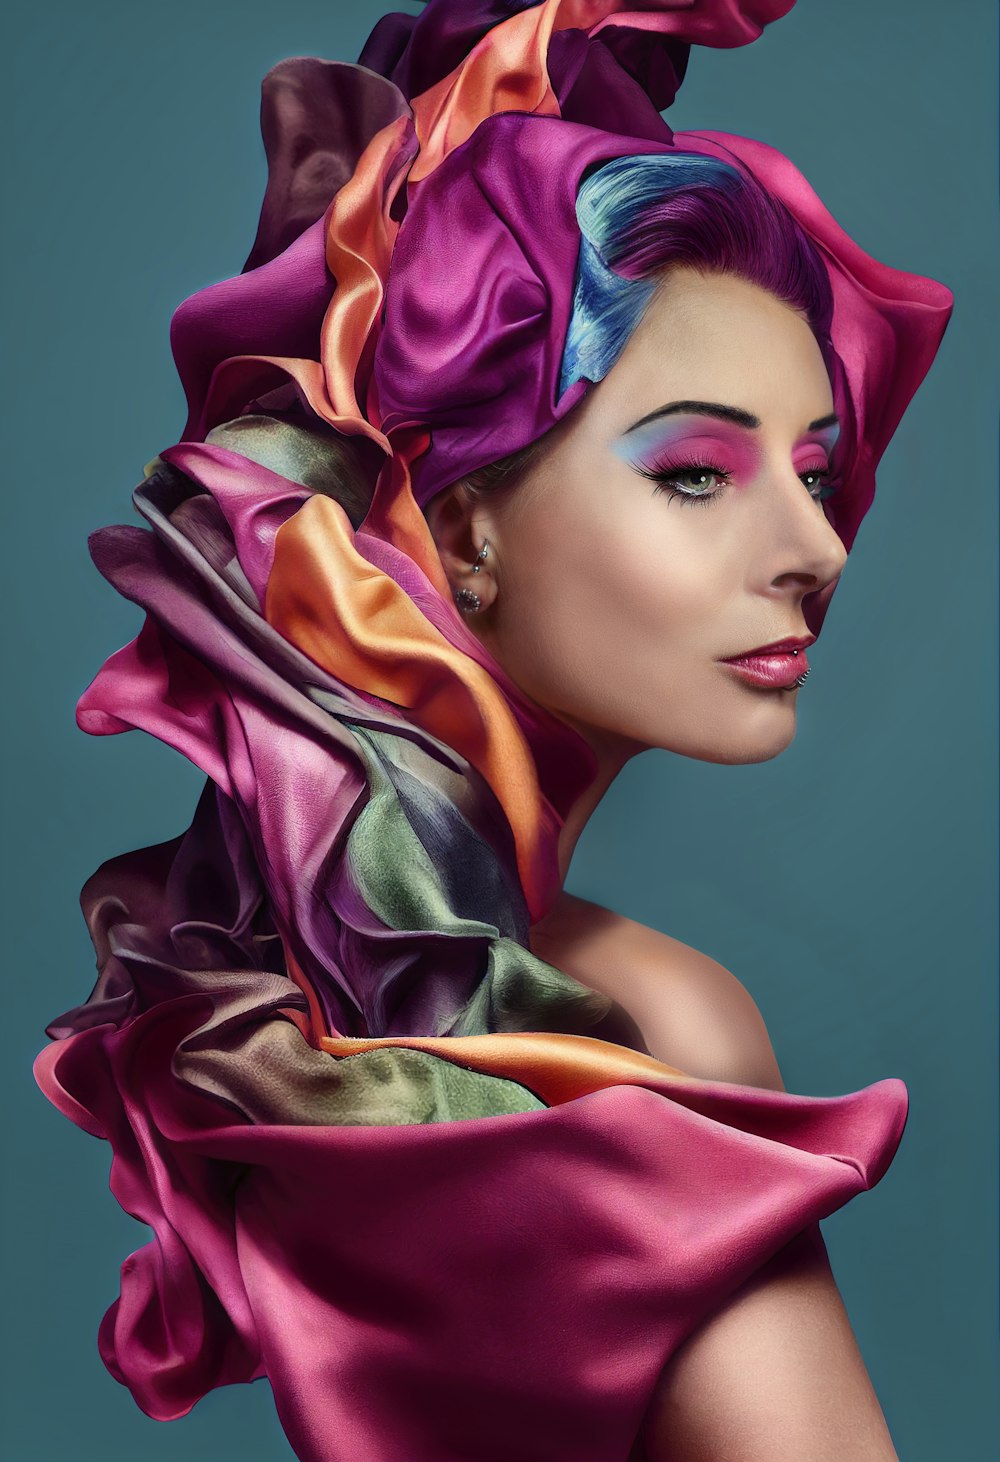 a woman wearing a colorful headdress